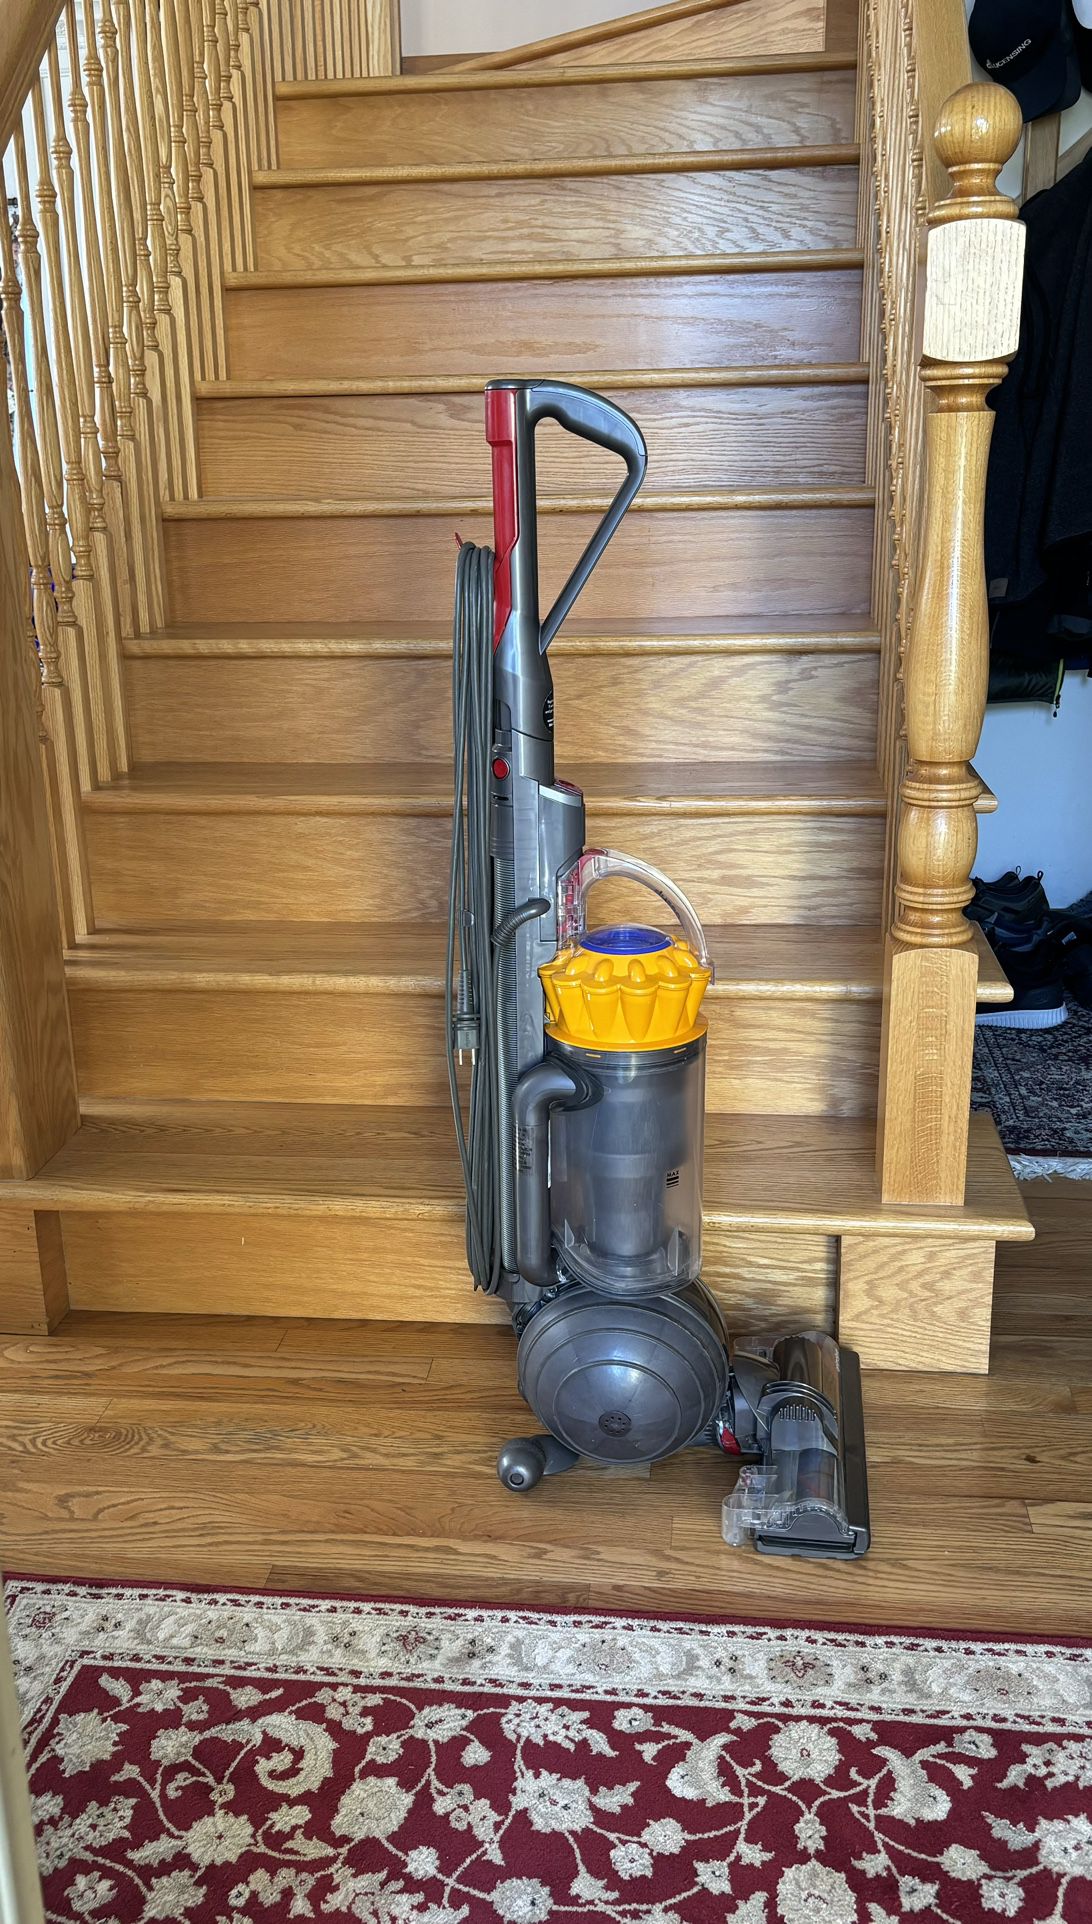 Dyson Ball Upright Vacuum